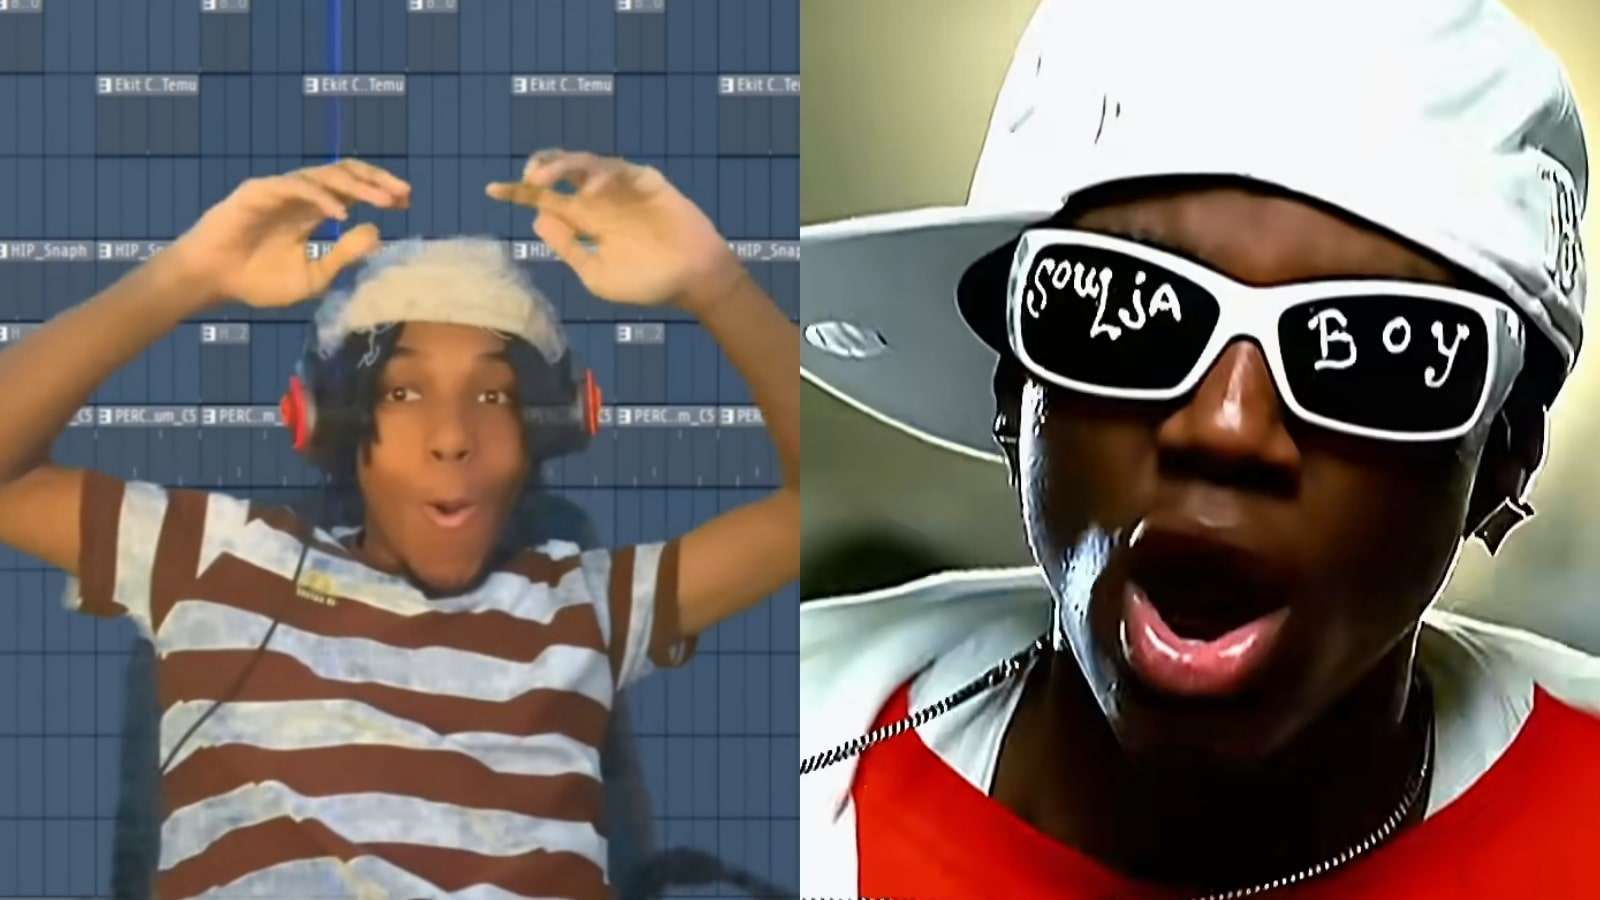 Beatmaker goes viral speedrunning Soulja Boy's "Crank That" song